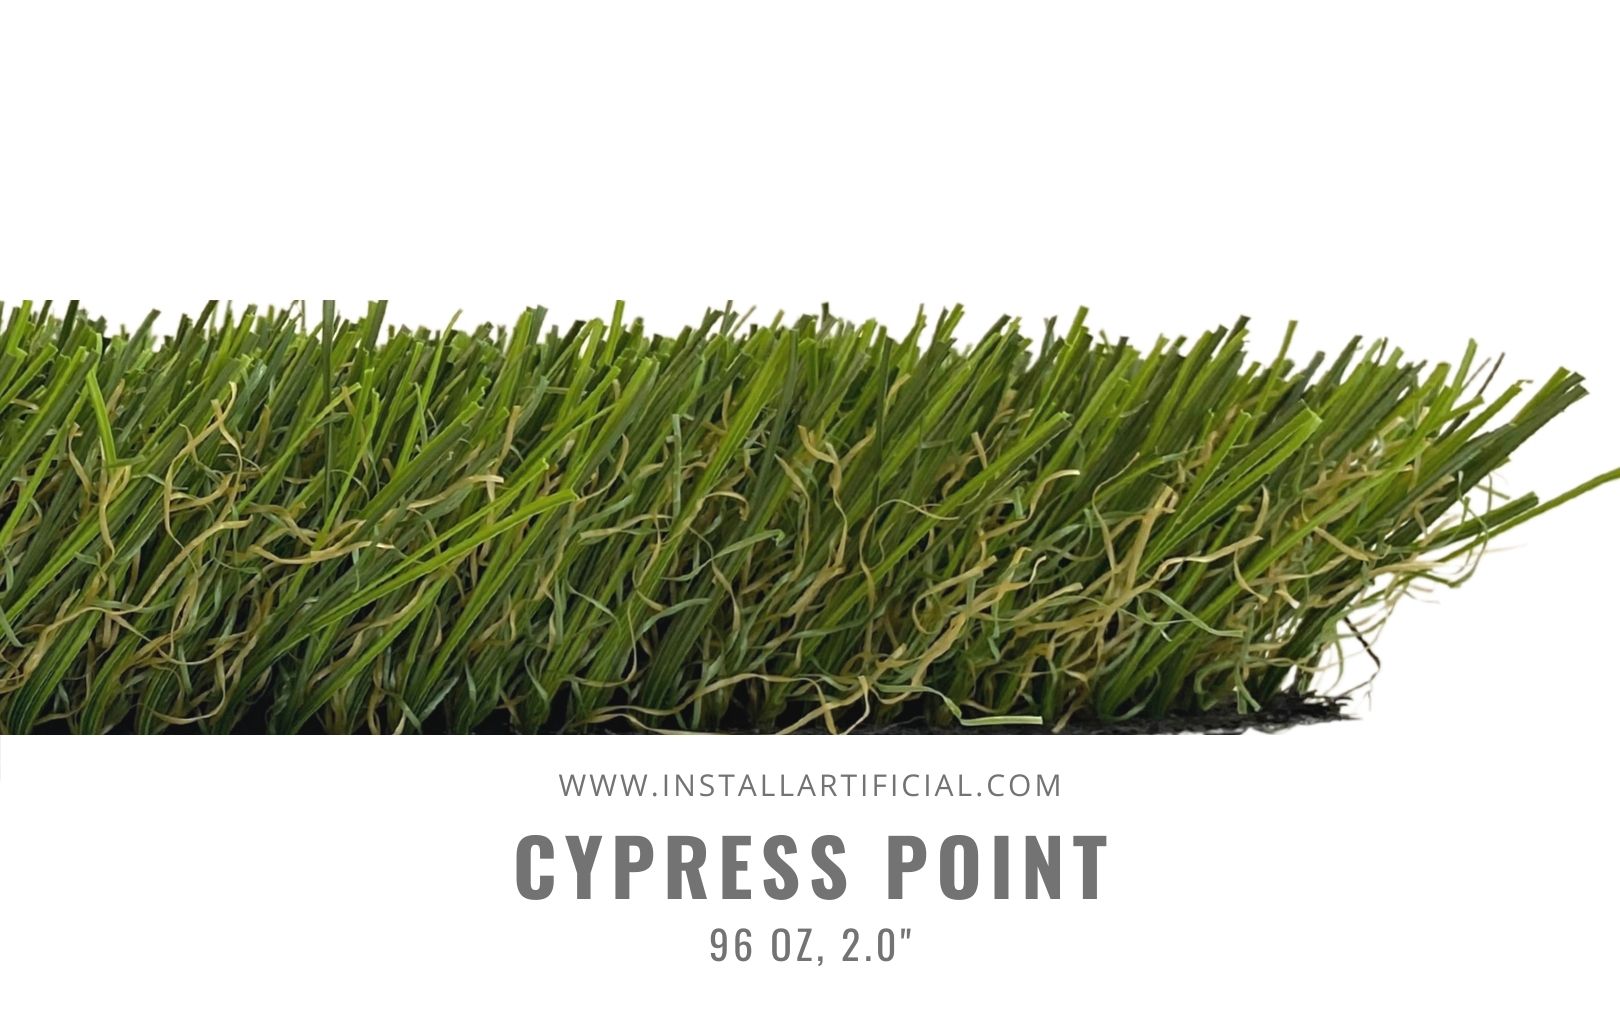 Cypress Point, Smart Turf, side